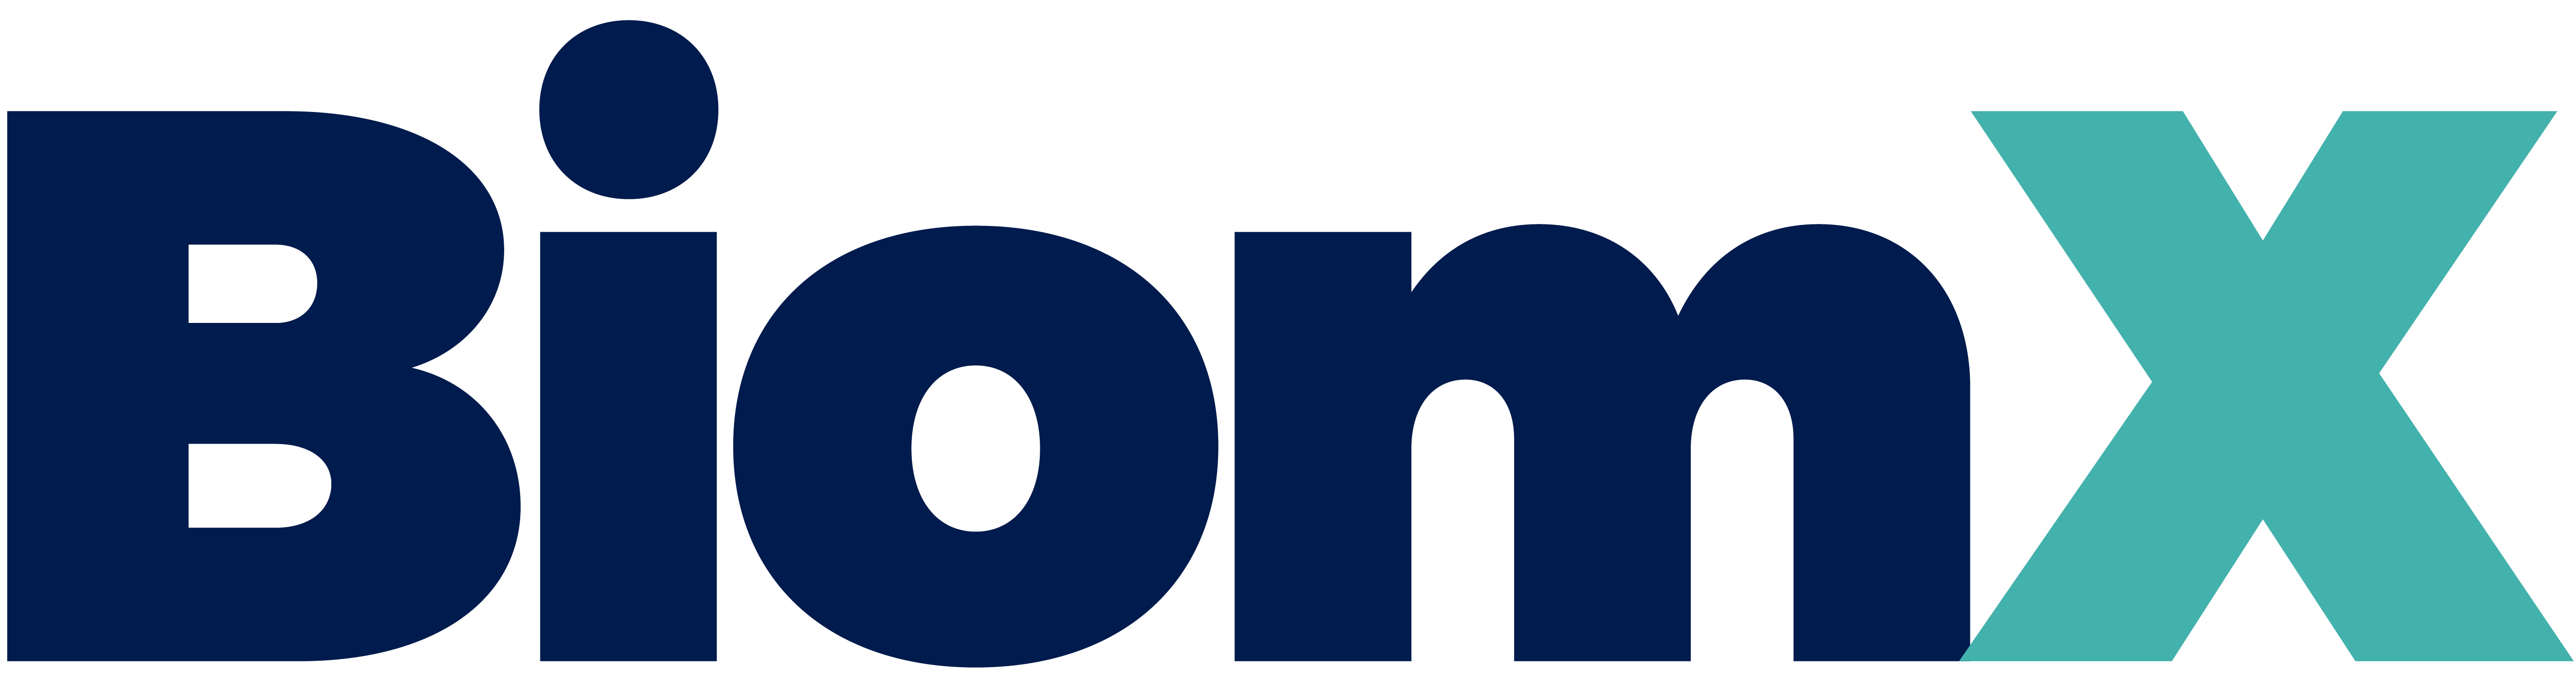 final_biomx_logo-01 (2).png